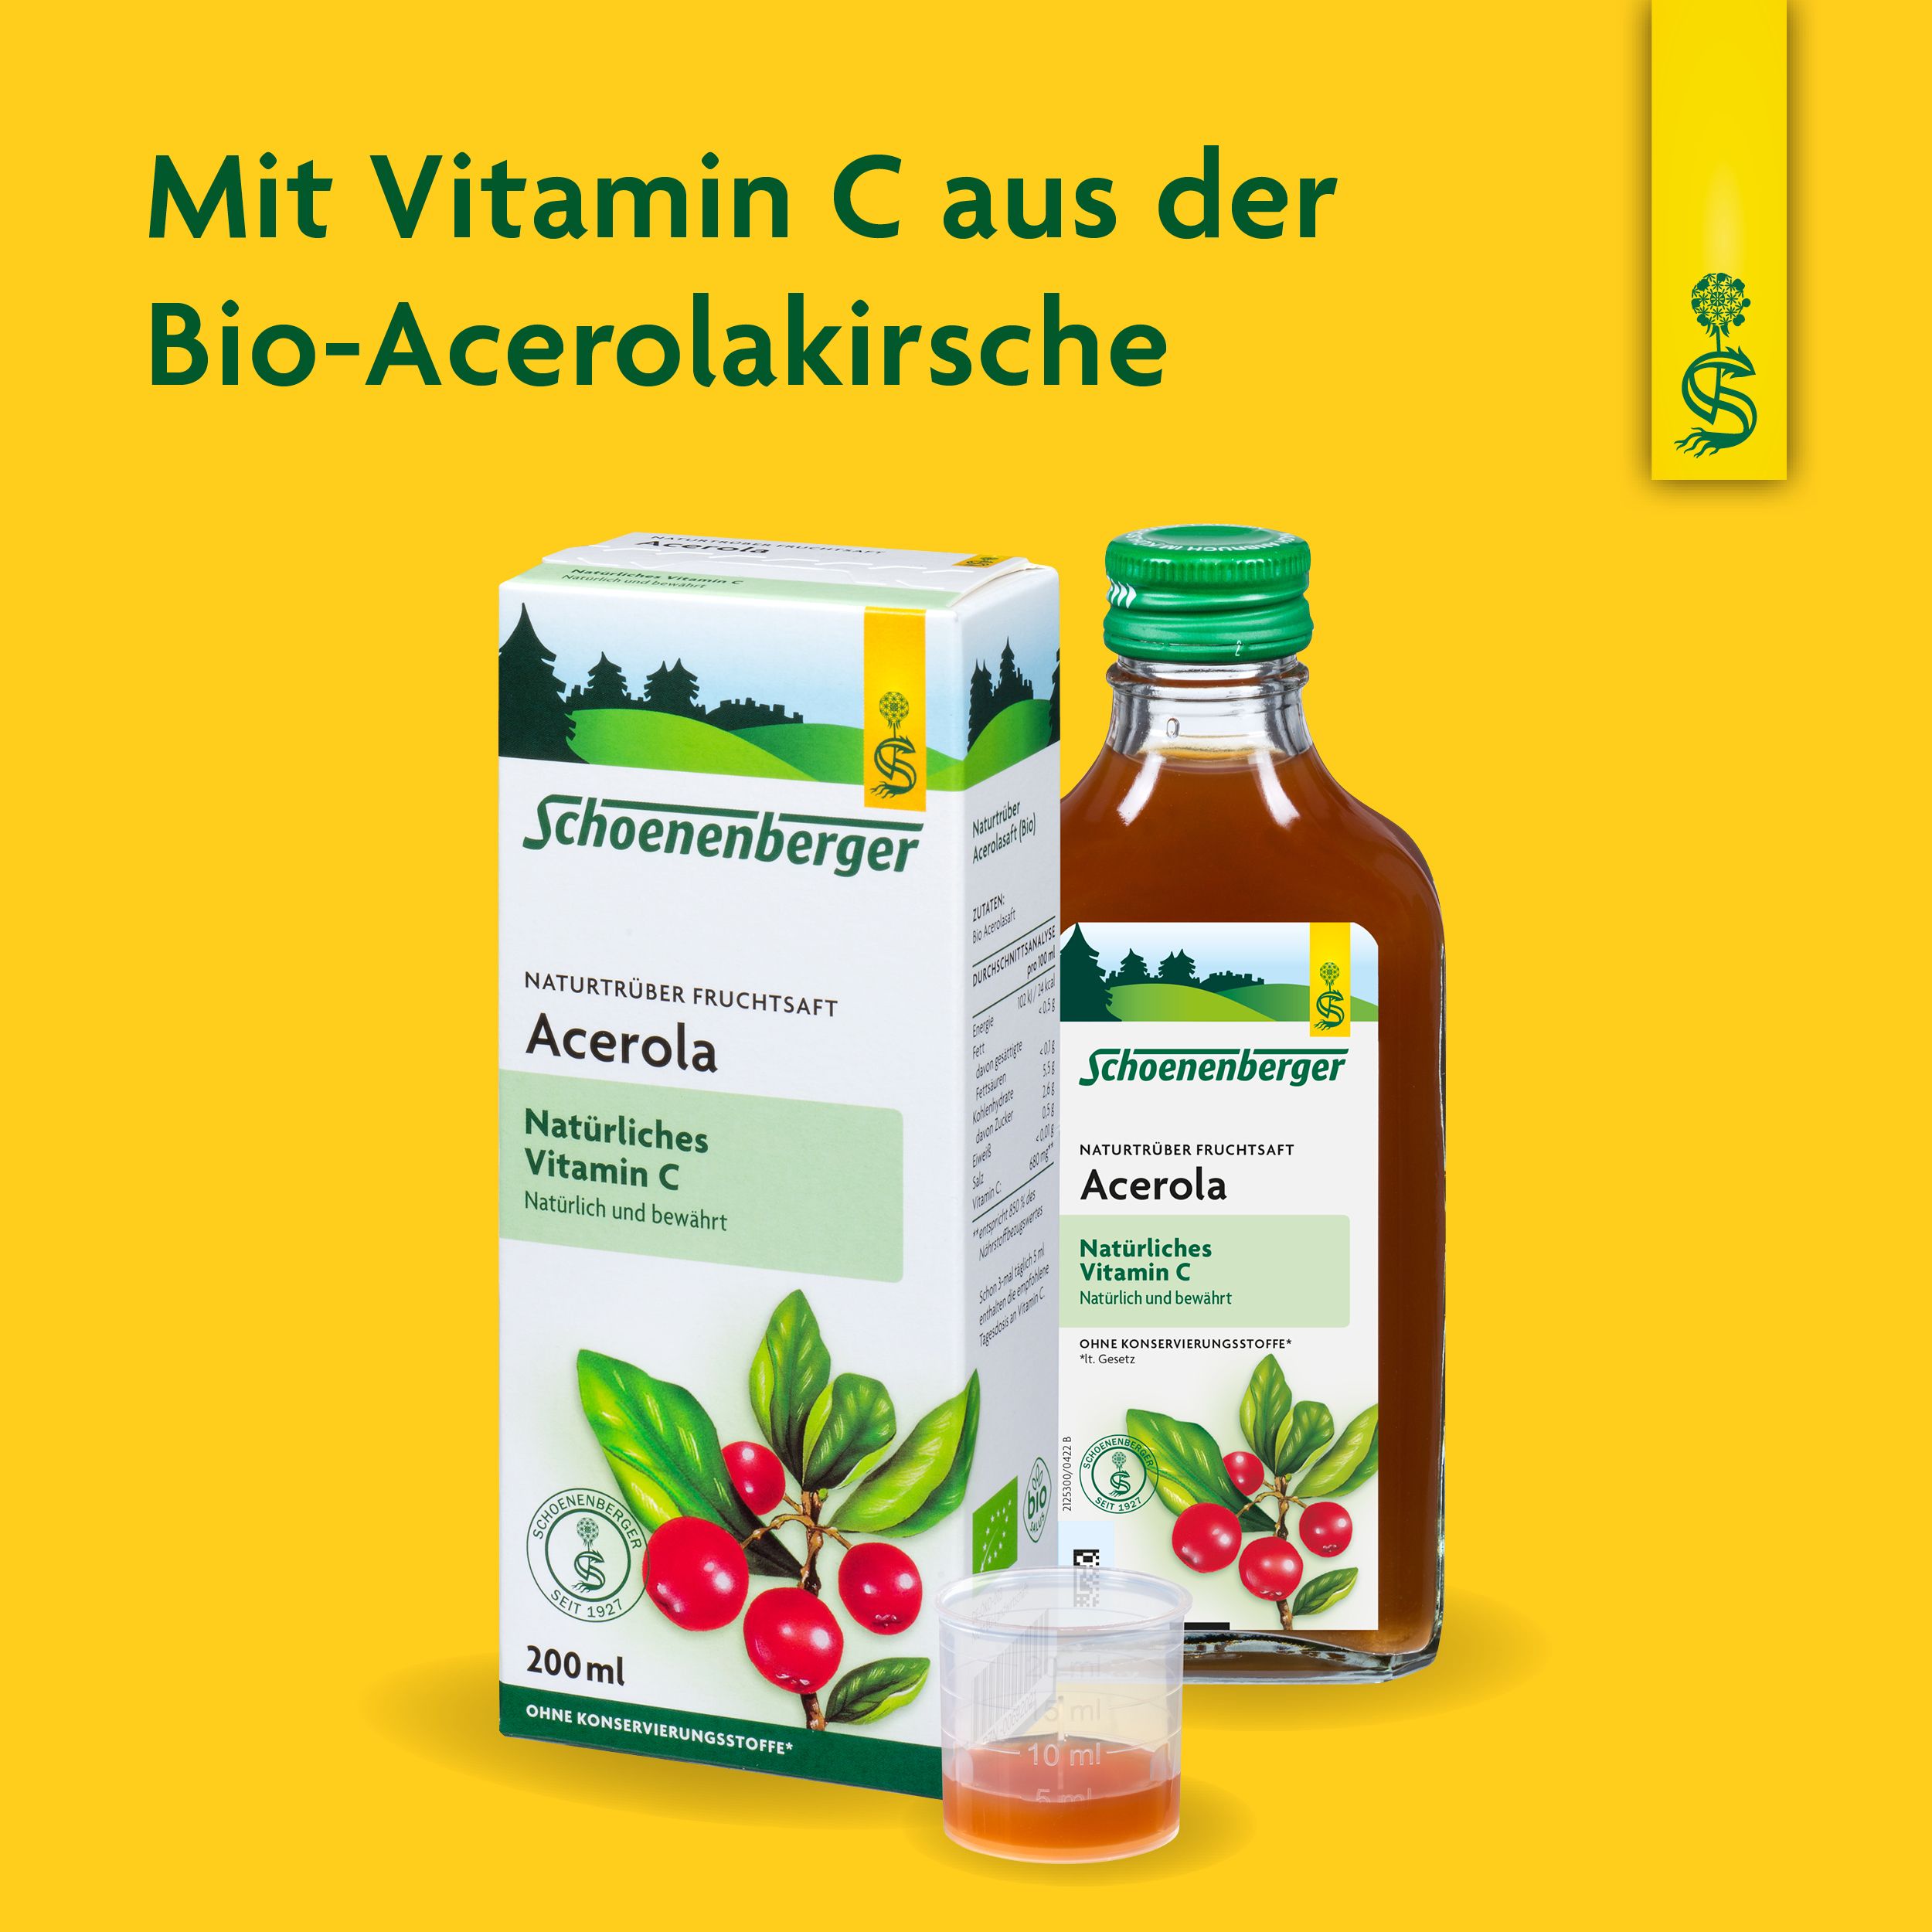 Schoenenberger® Acerola naturtrüber Fruchtsaft